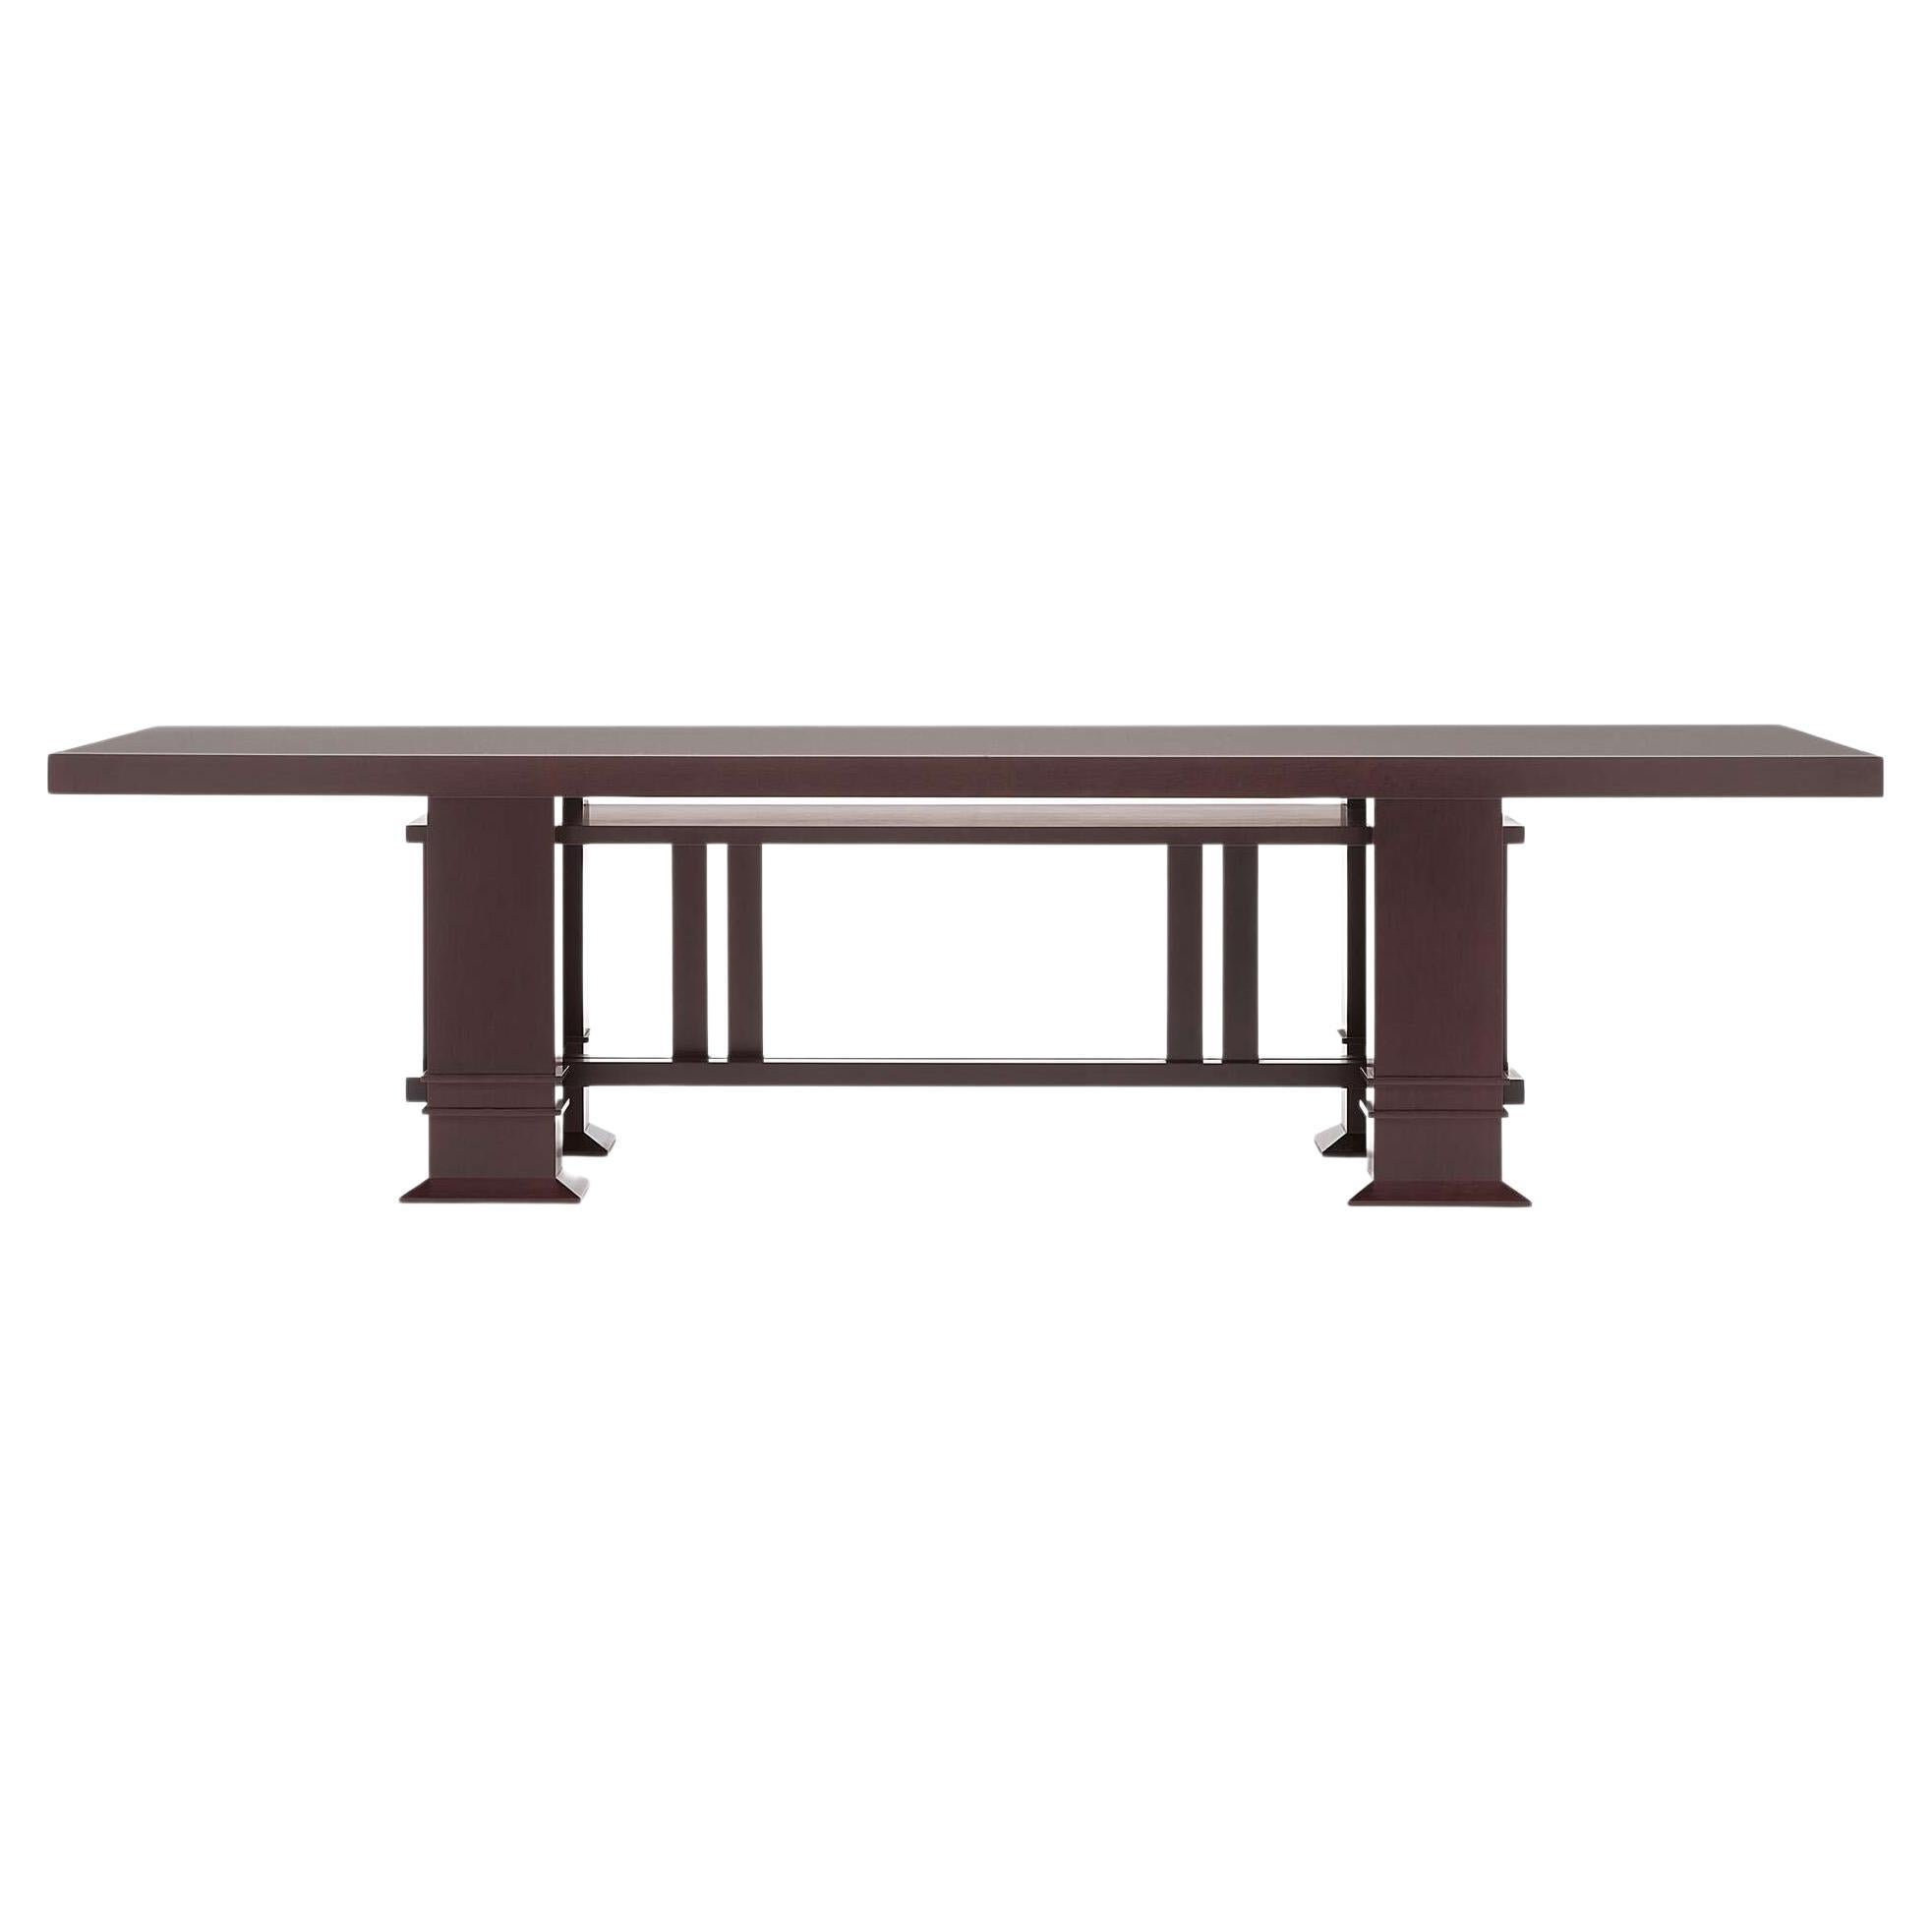 Frank Lloyd Wright "Allen" Table for Cassina, Italy, new